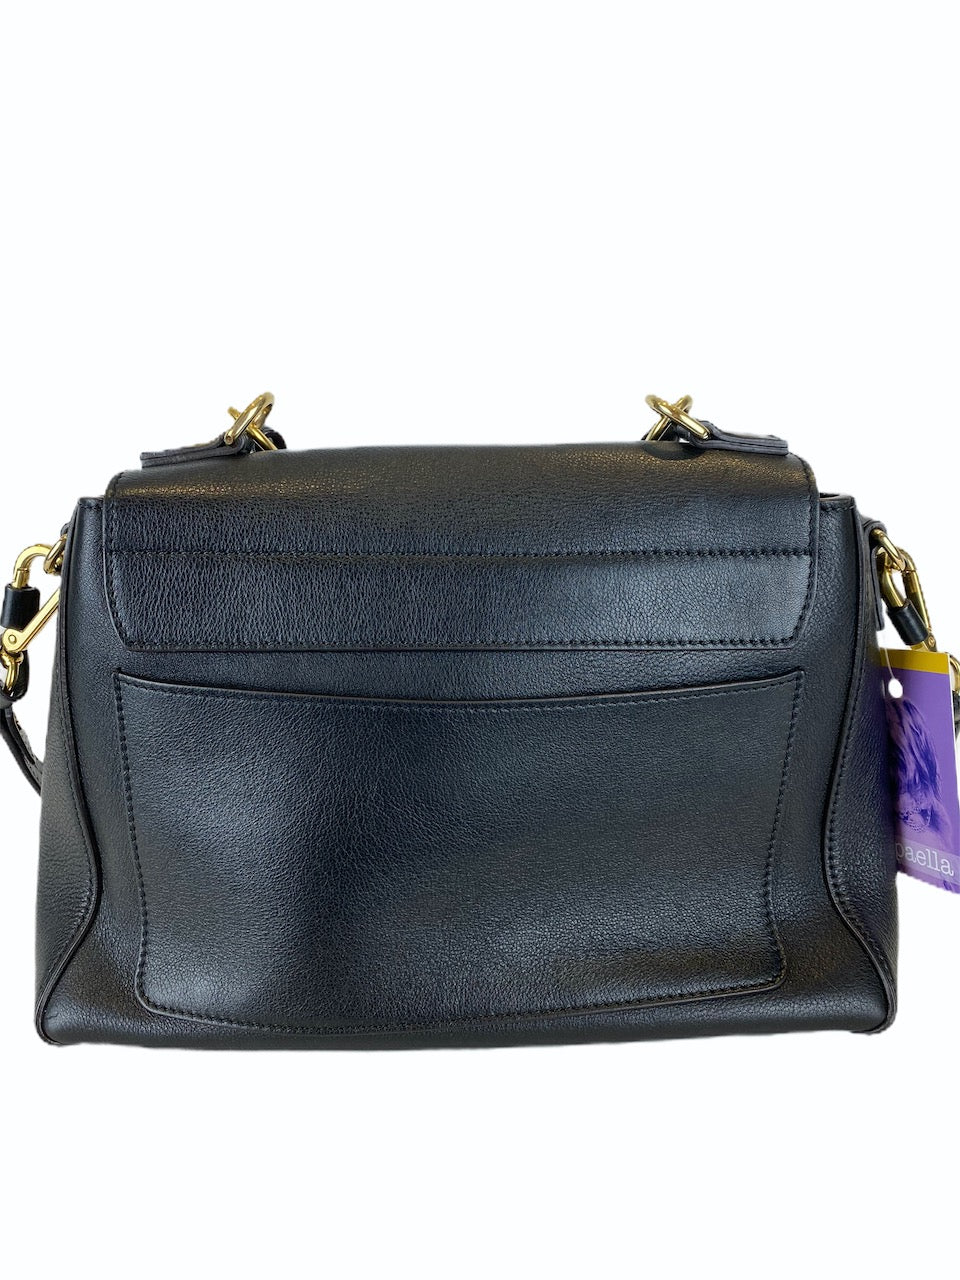 Chloe Medium Black Leather "Faye" Shoulder Bag - As Seen on Instagram 2/9/20 - Siopaella Designer Exchange